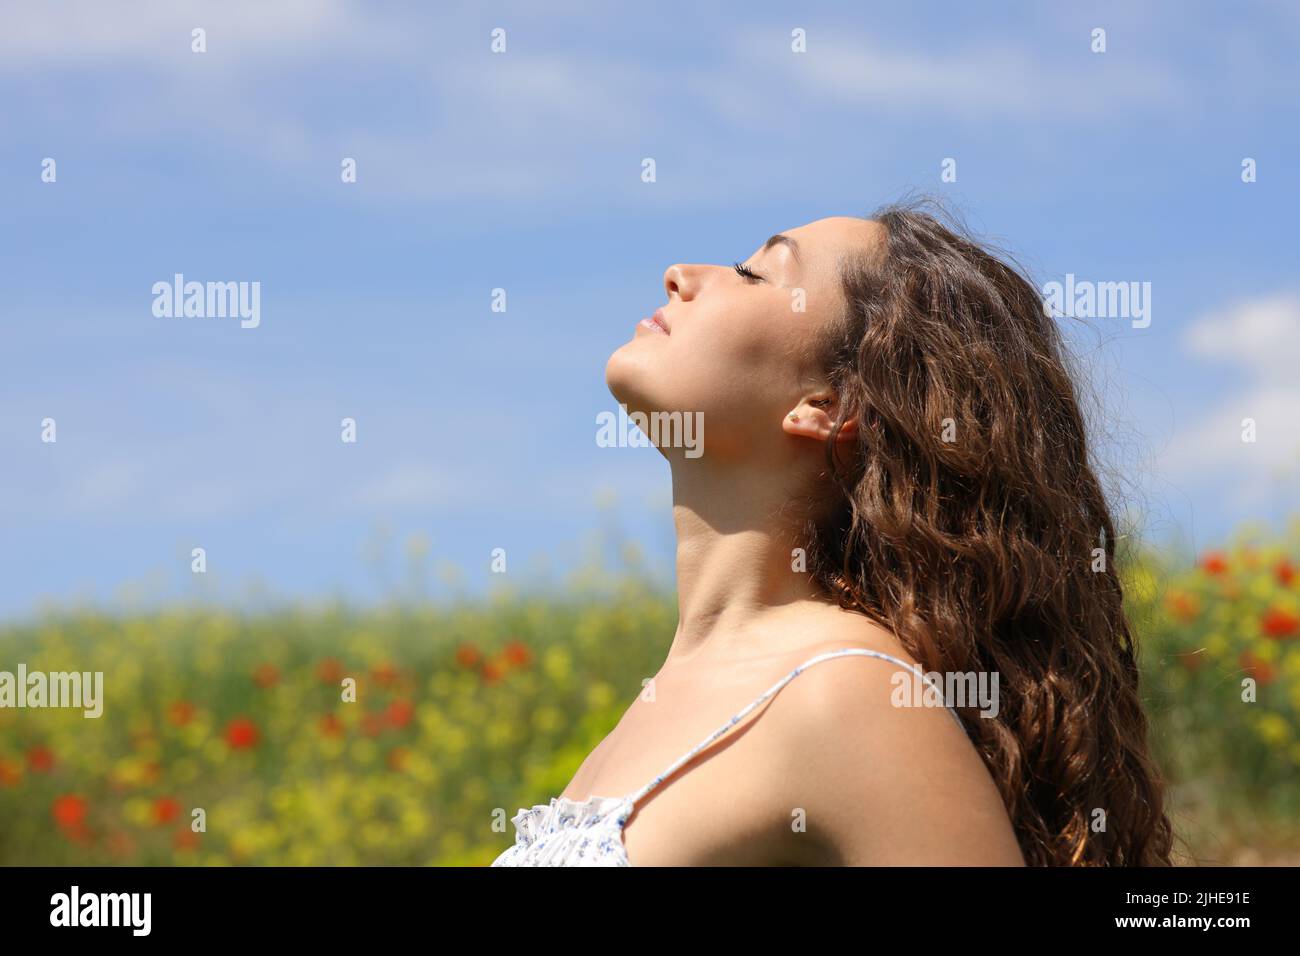 Side view portrait of a woman breathing in a flowers field Stock Photo